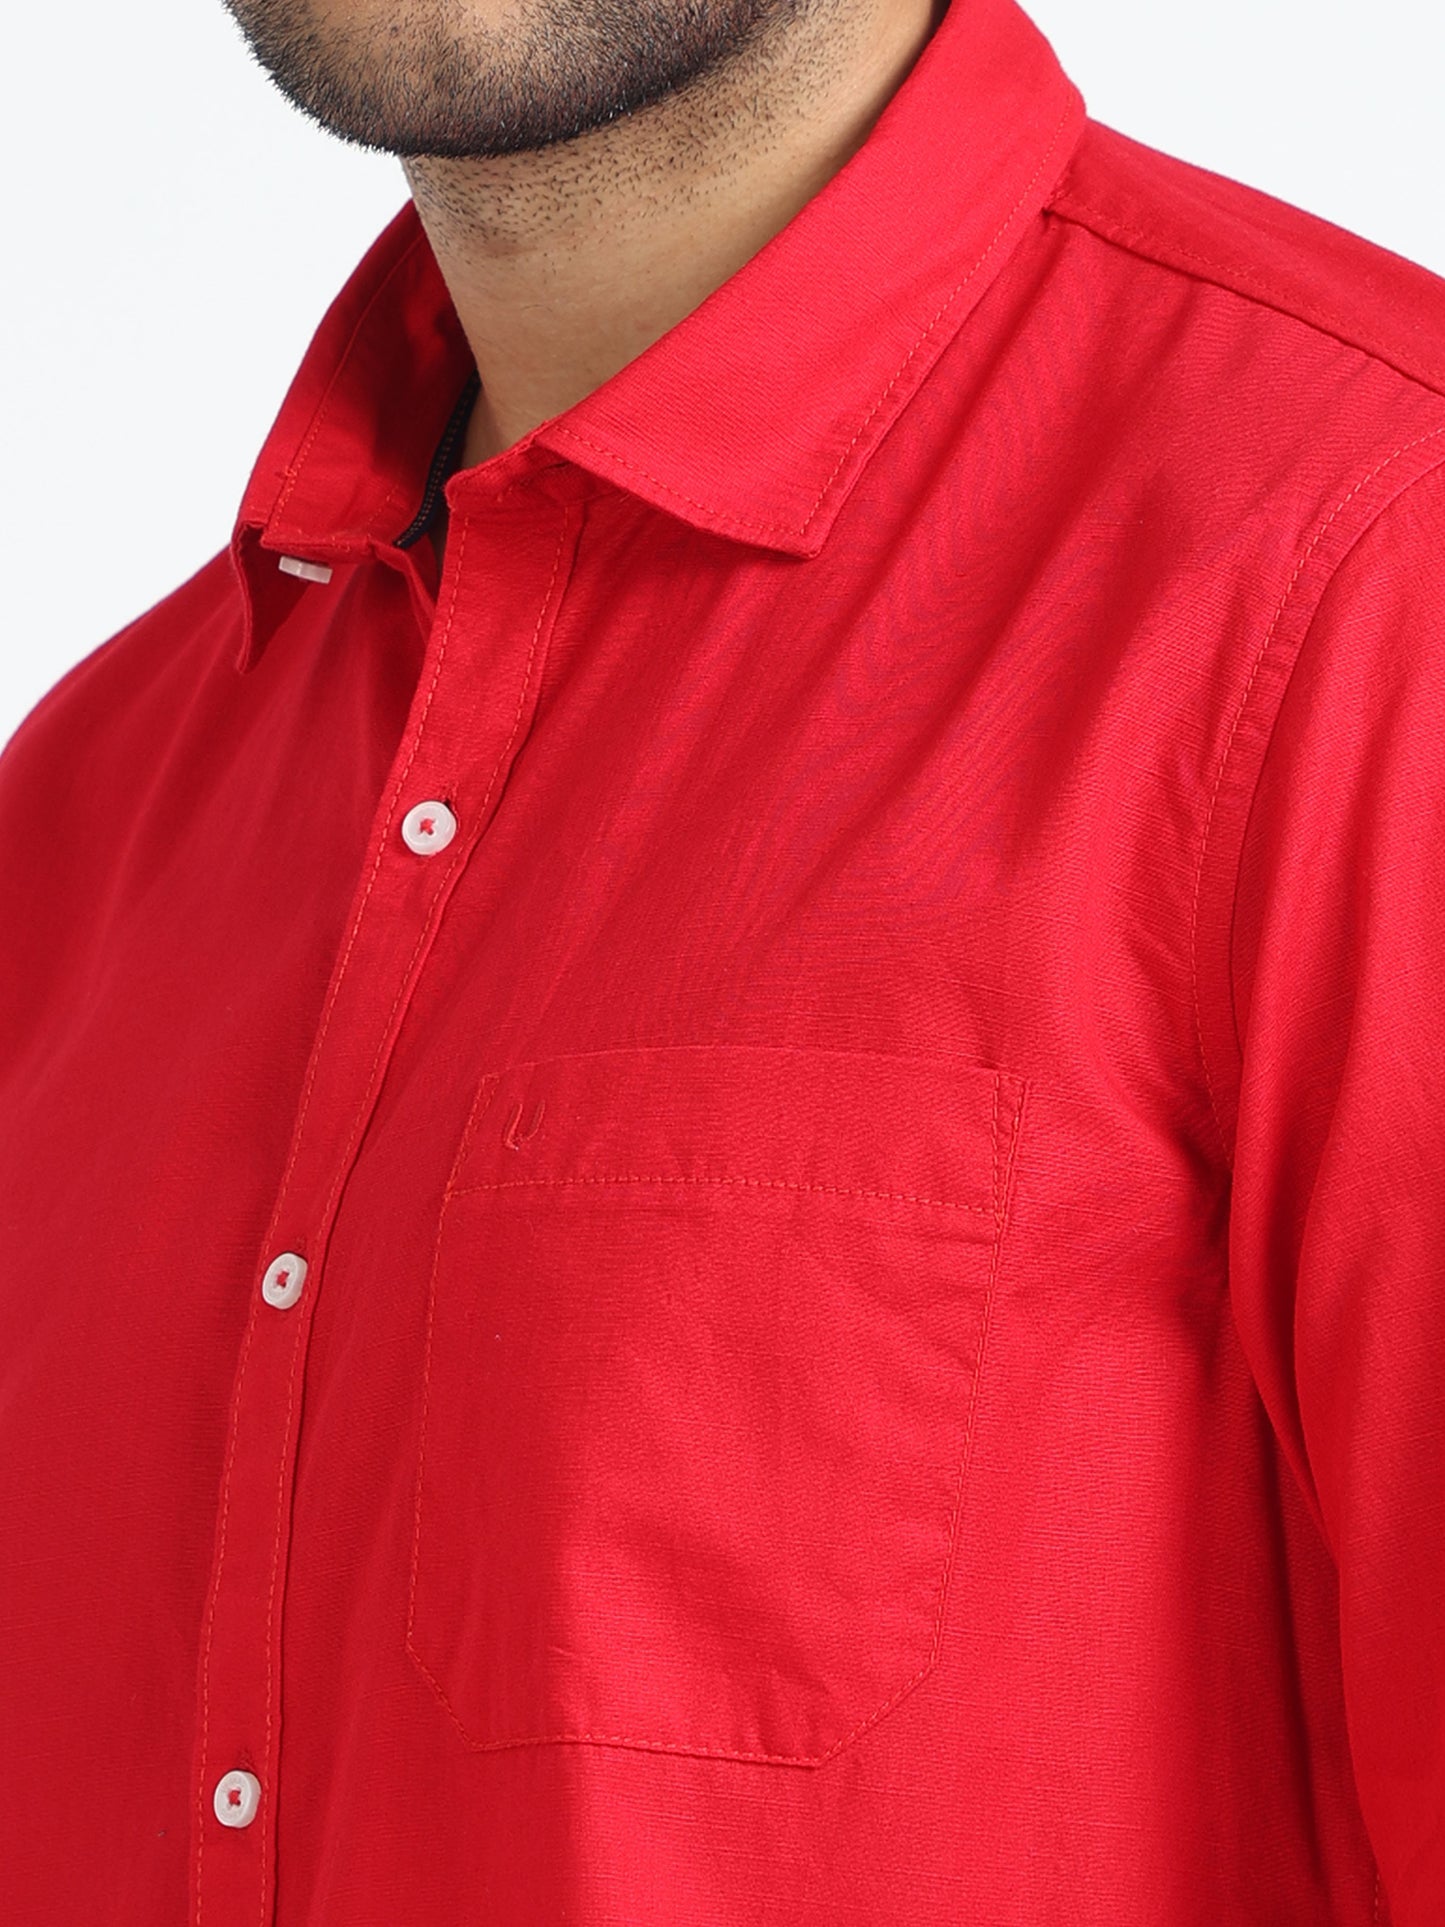 Red Jet Plain Shirt